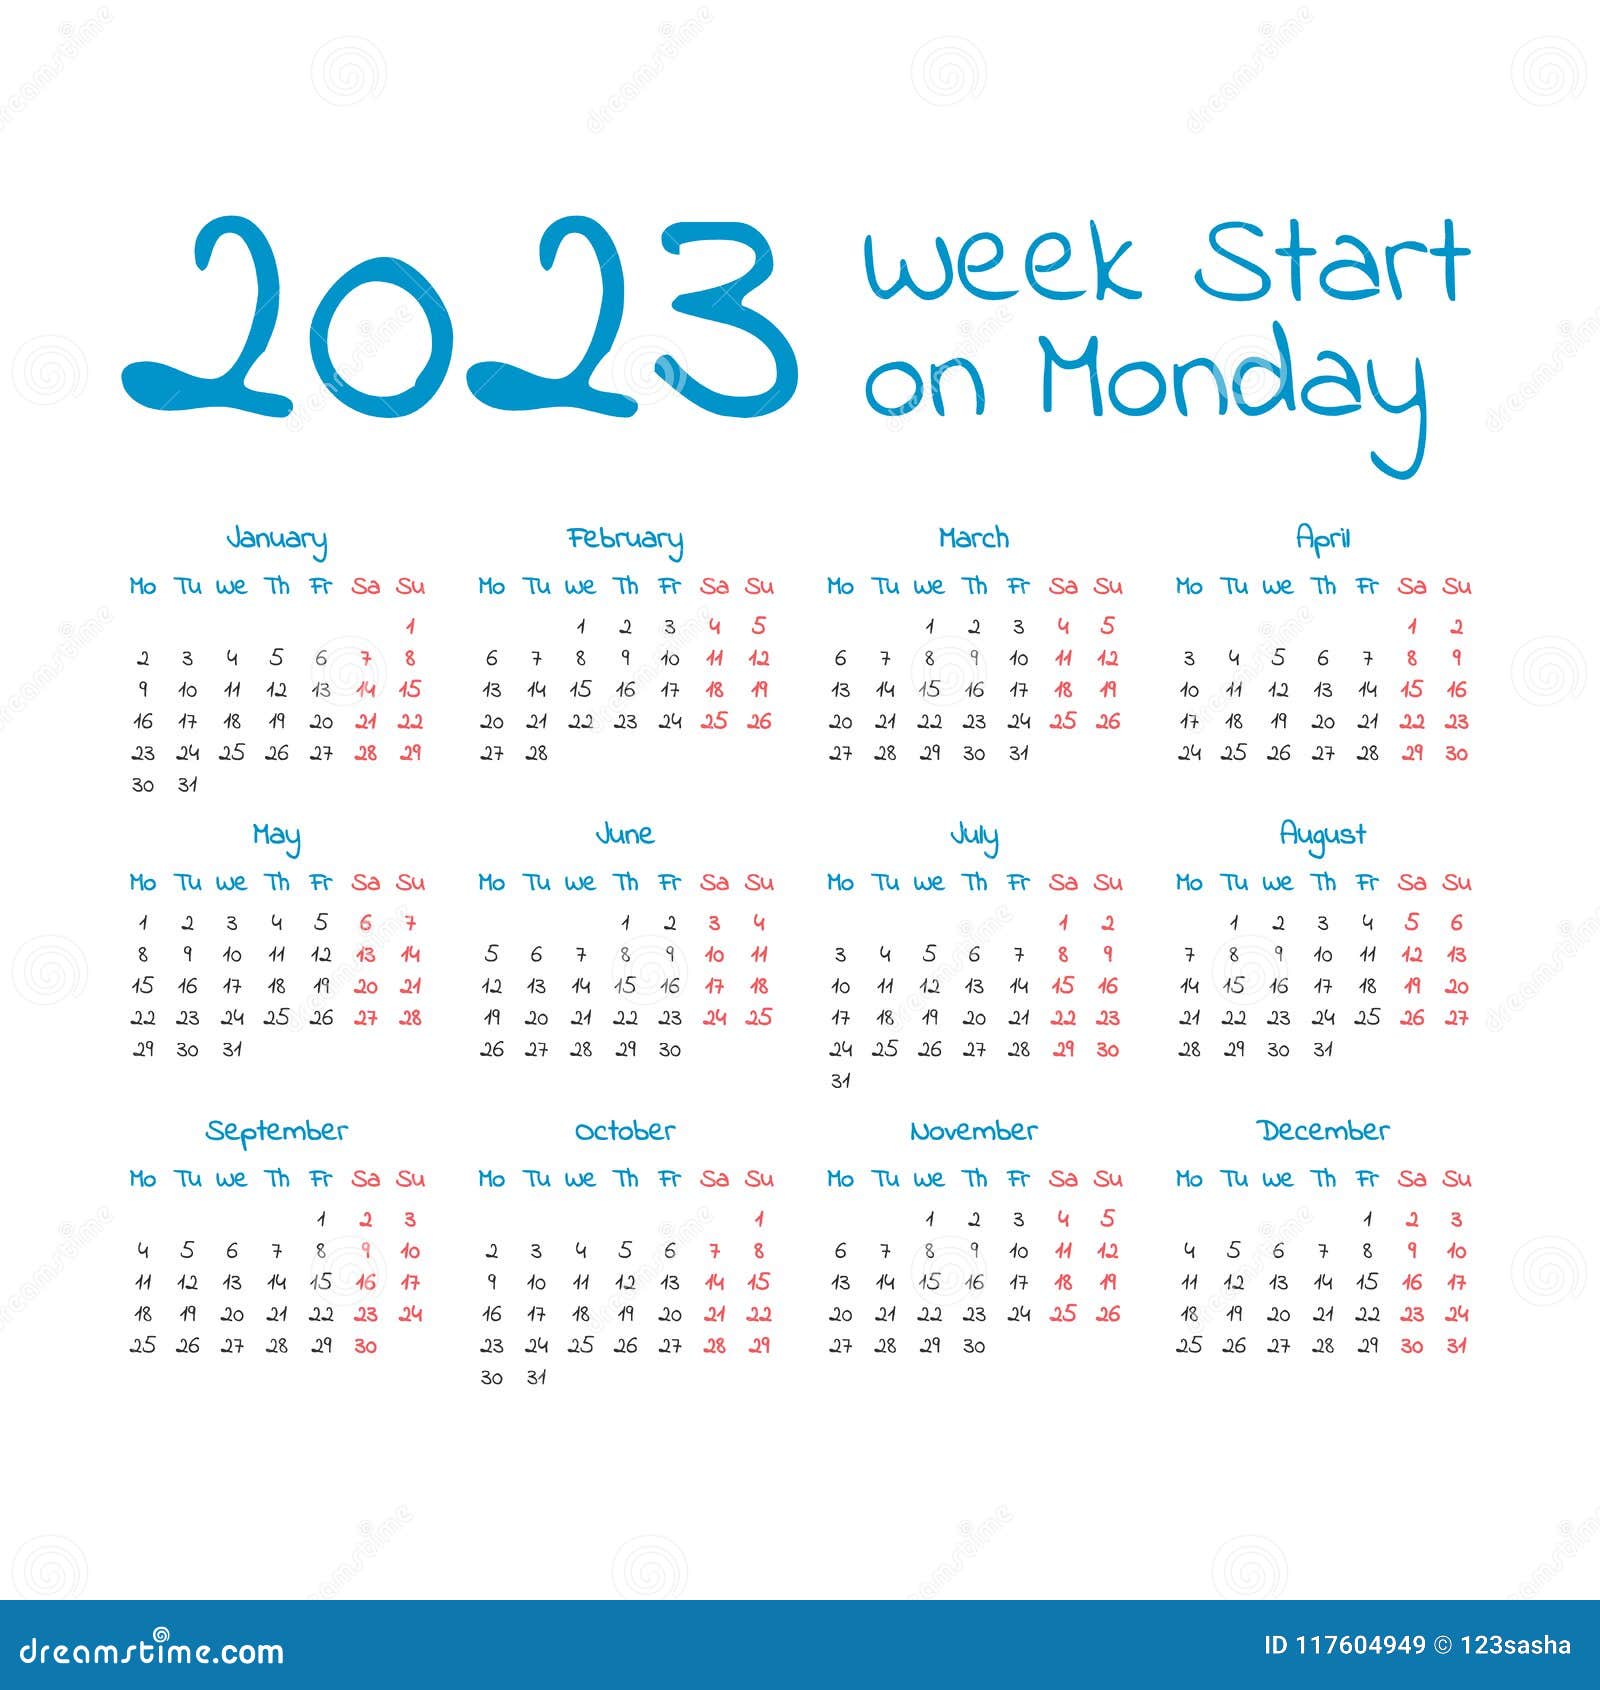 Simple 2023 Year Calendar Vector Illustration | CartoonDealer.com #80462266